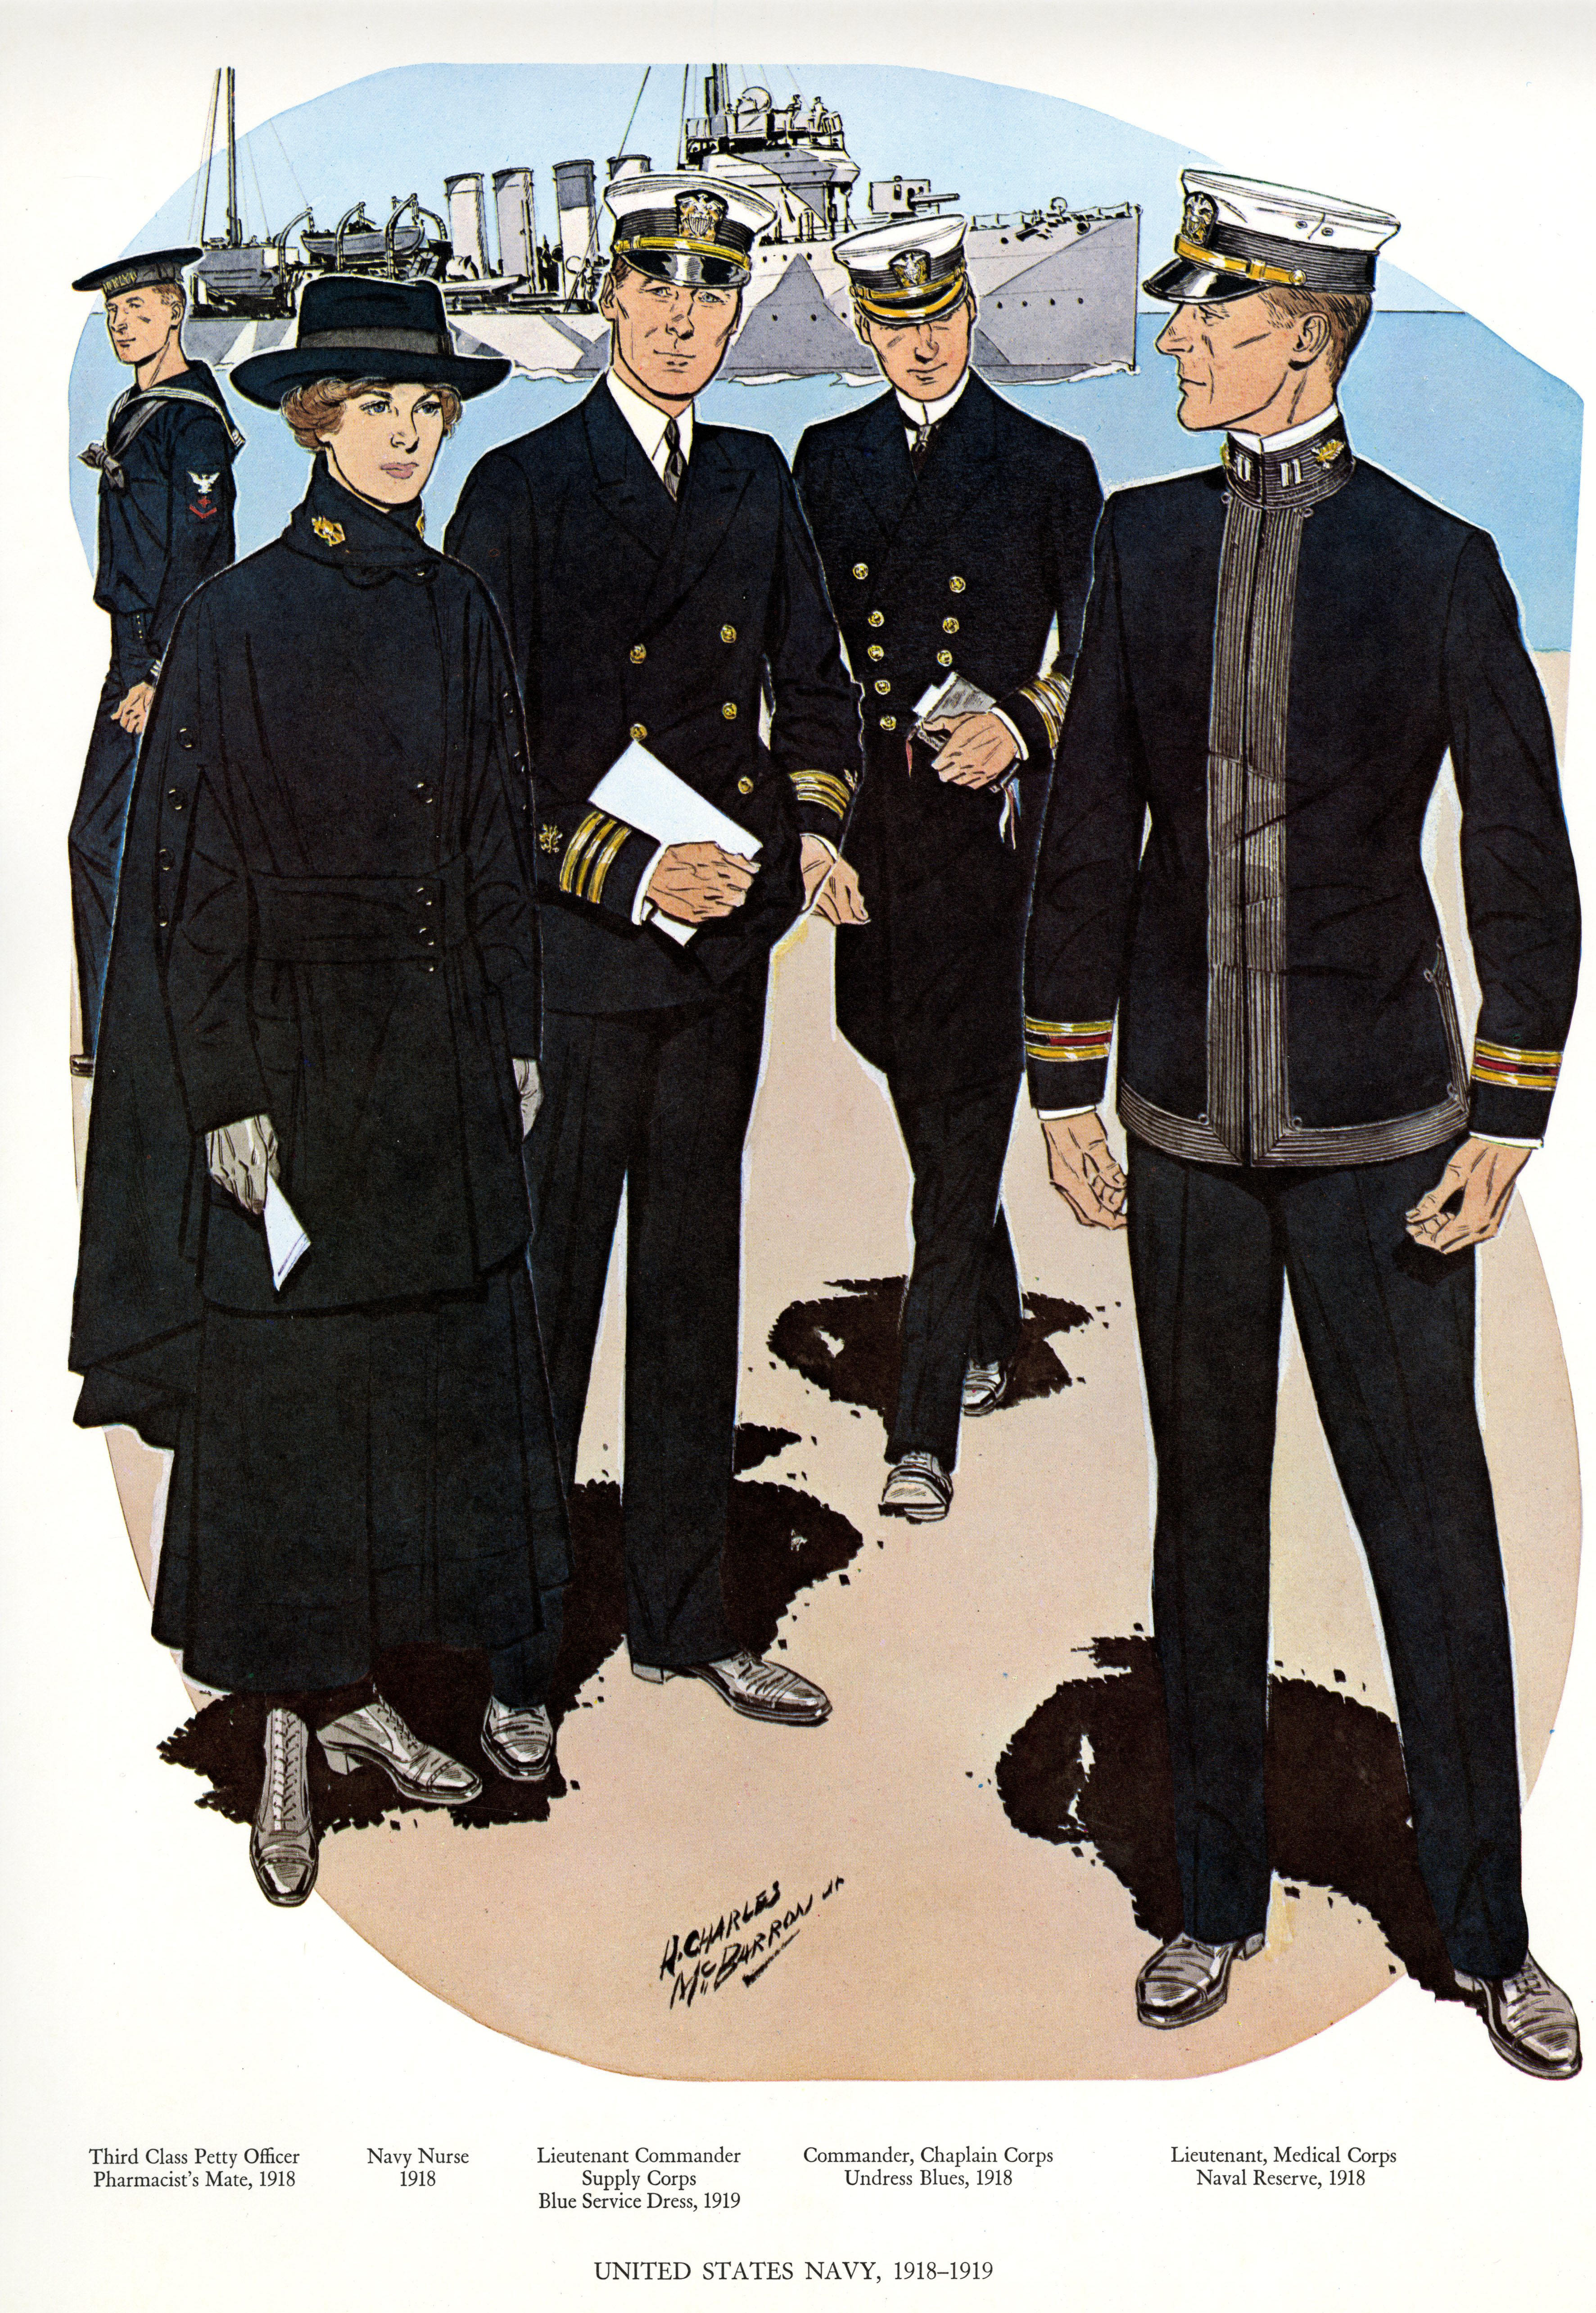 Uniforms of the U.S. Navy 1900